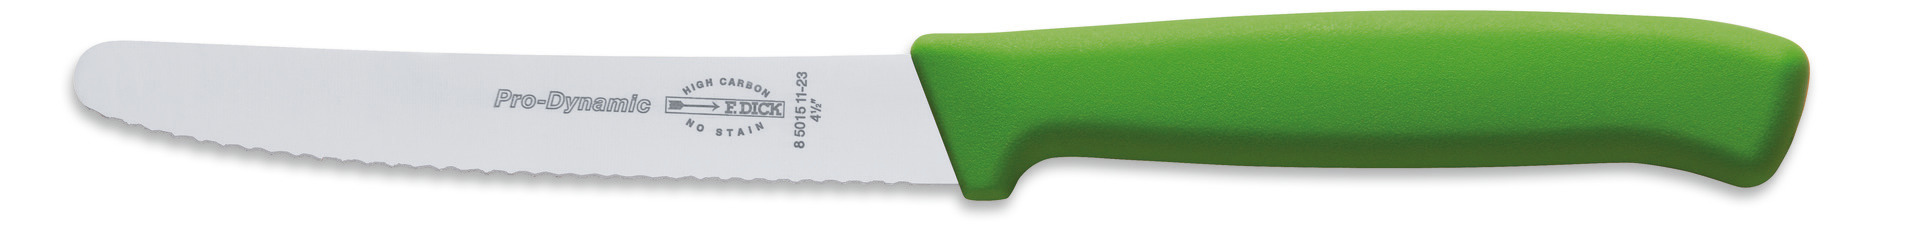 Allzweckmesser Klingenlänge 110 mm Wellenschliff / apfelgrüner Griff